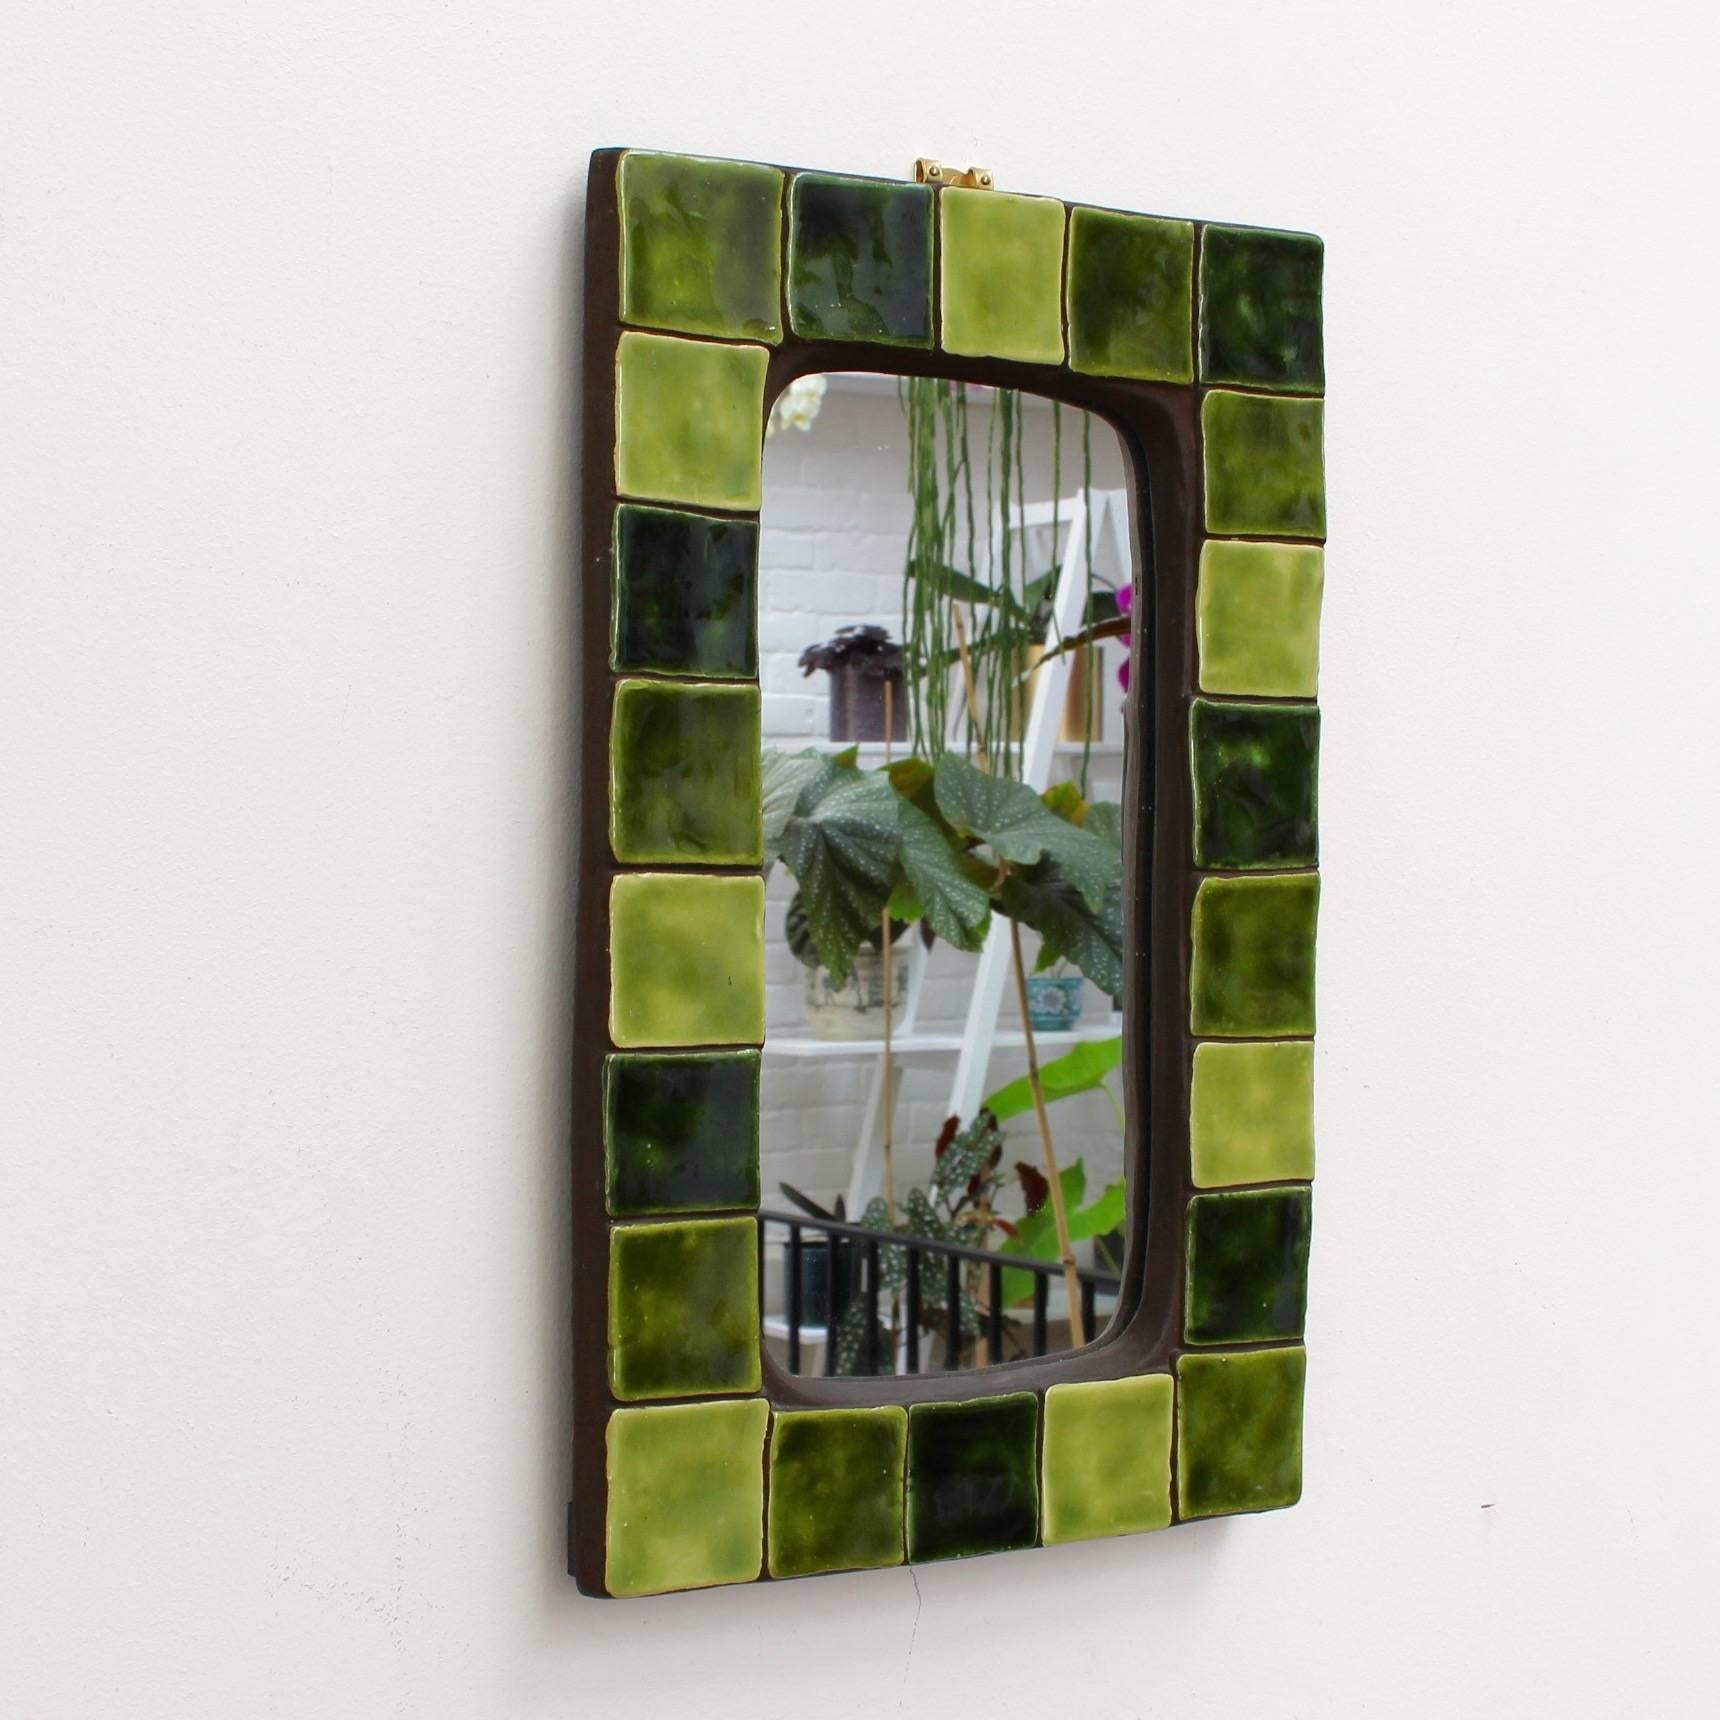 Glazed Green Ceramic Tiled French Wall Mirror, circa 1970s